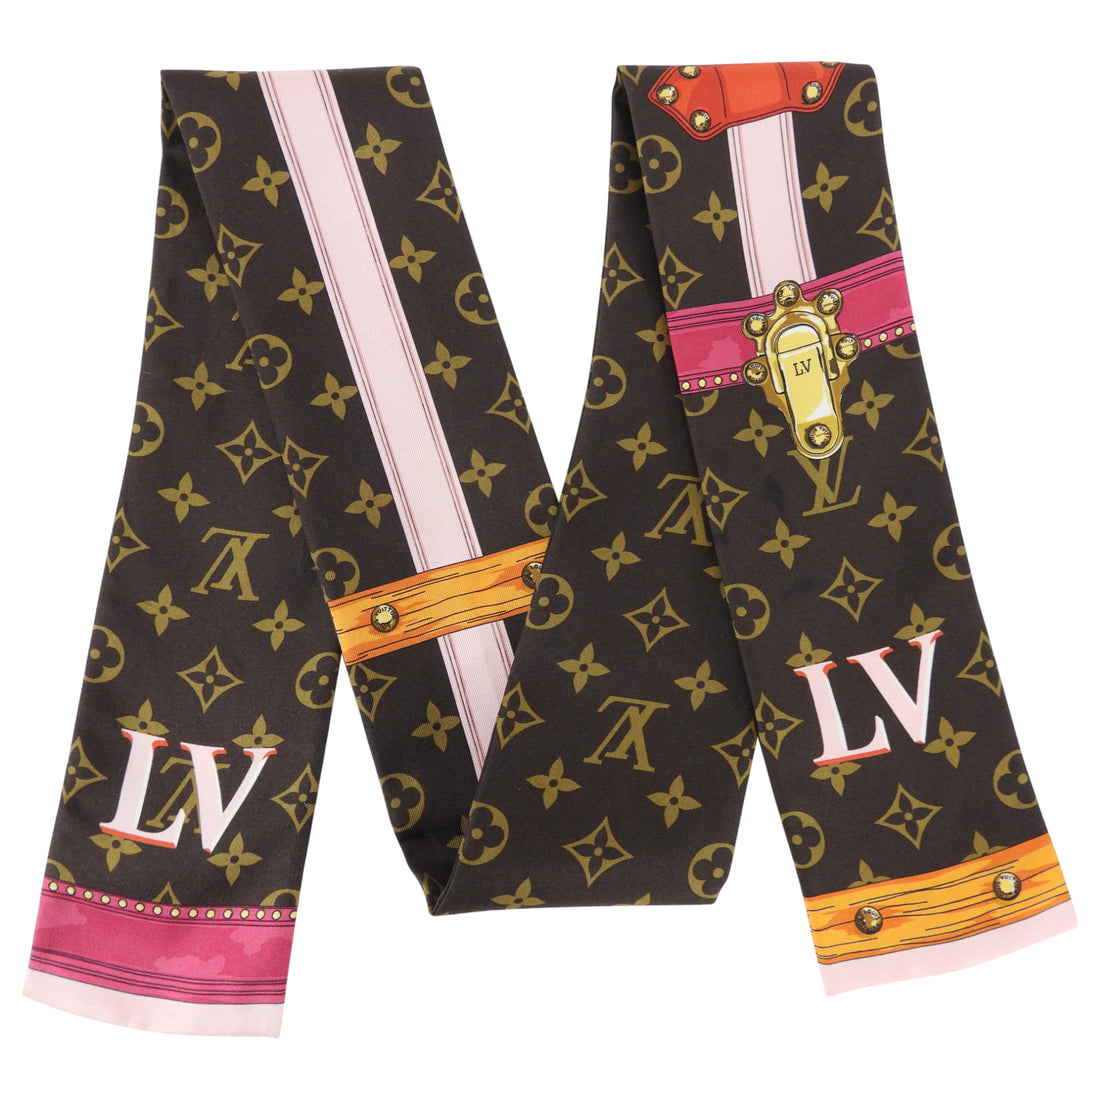 Mimosa Nepal - Louis Vuitton silk scarf for summer